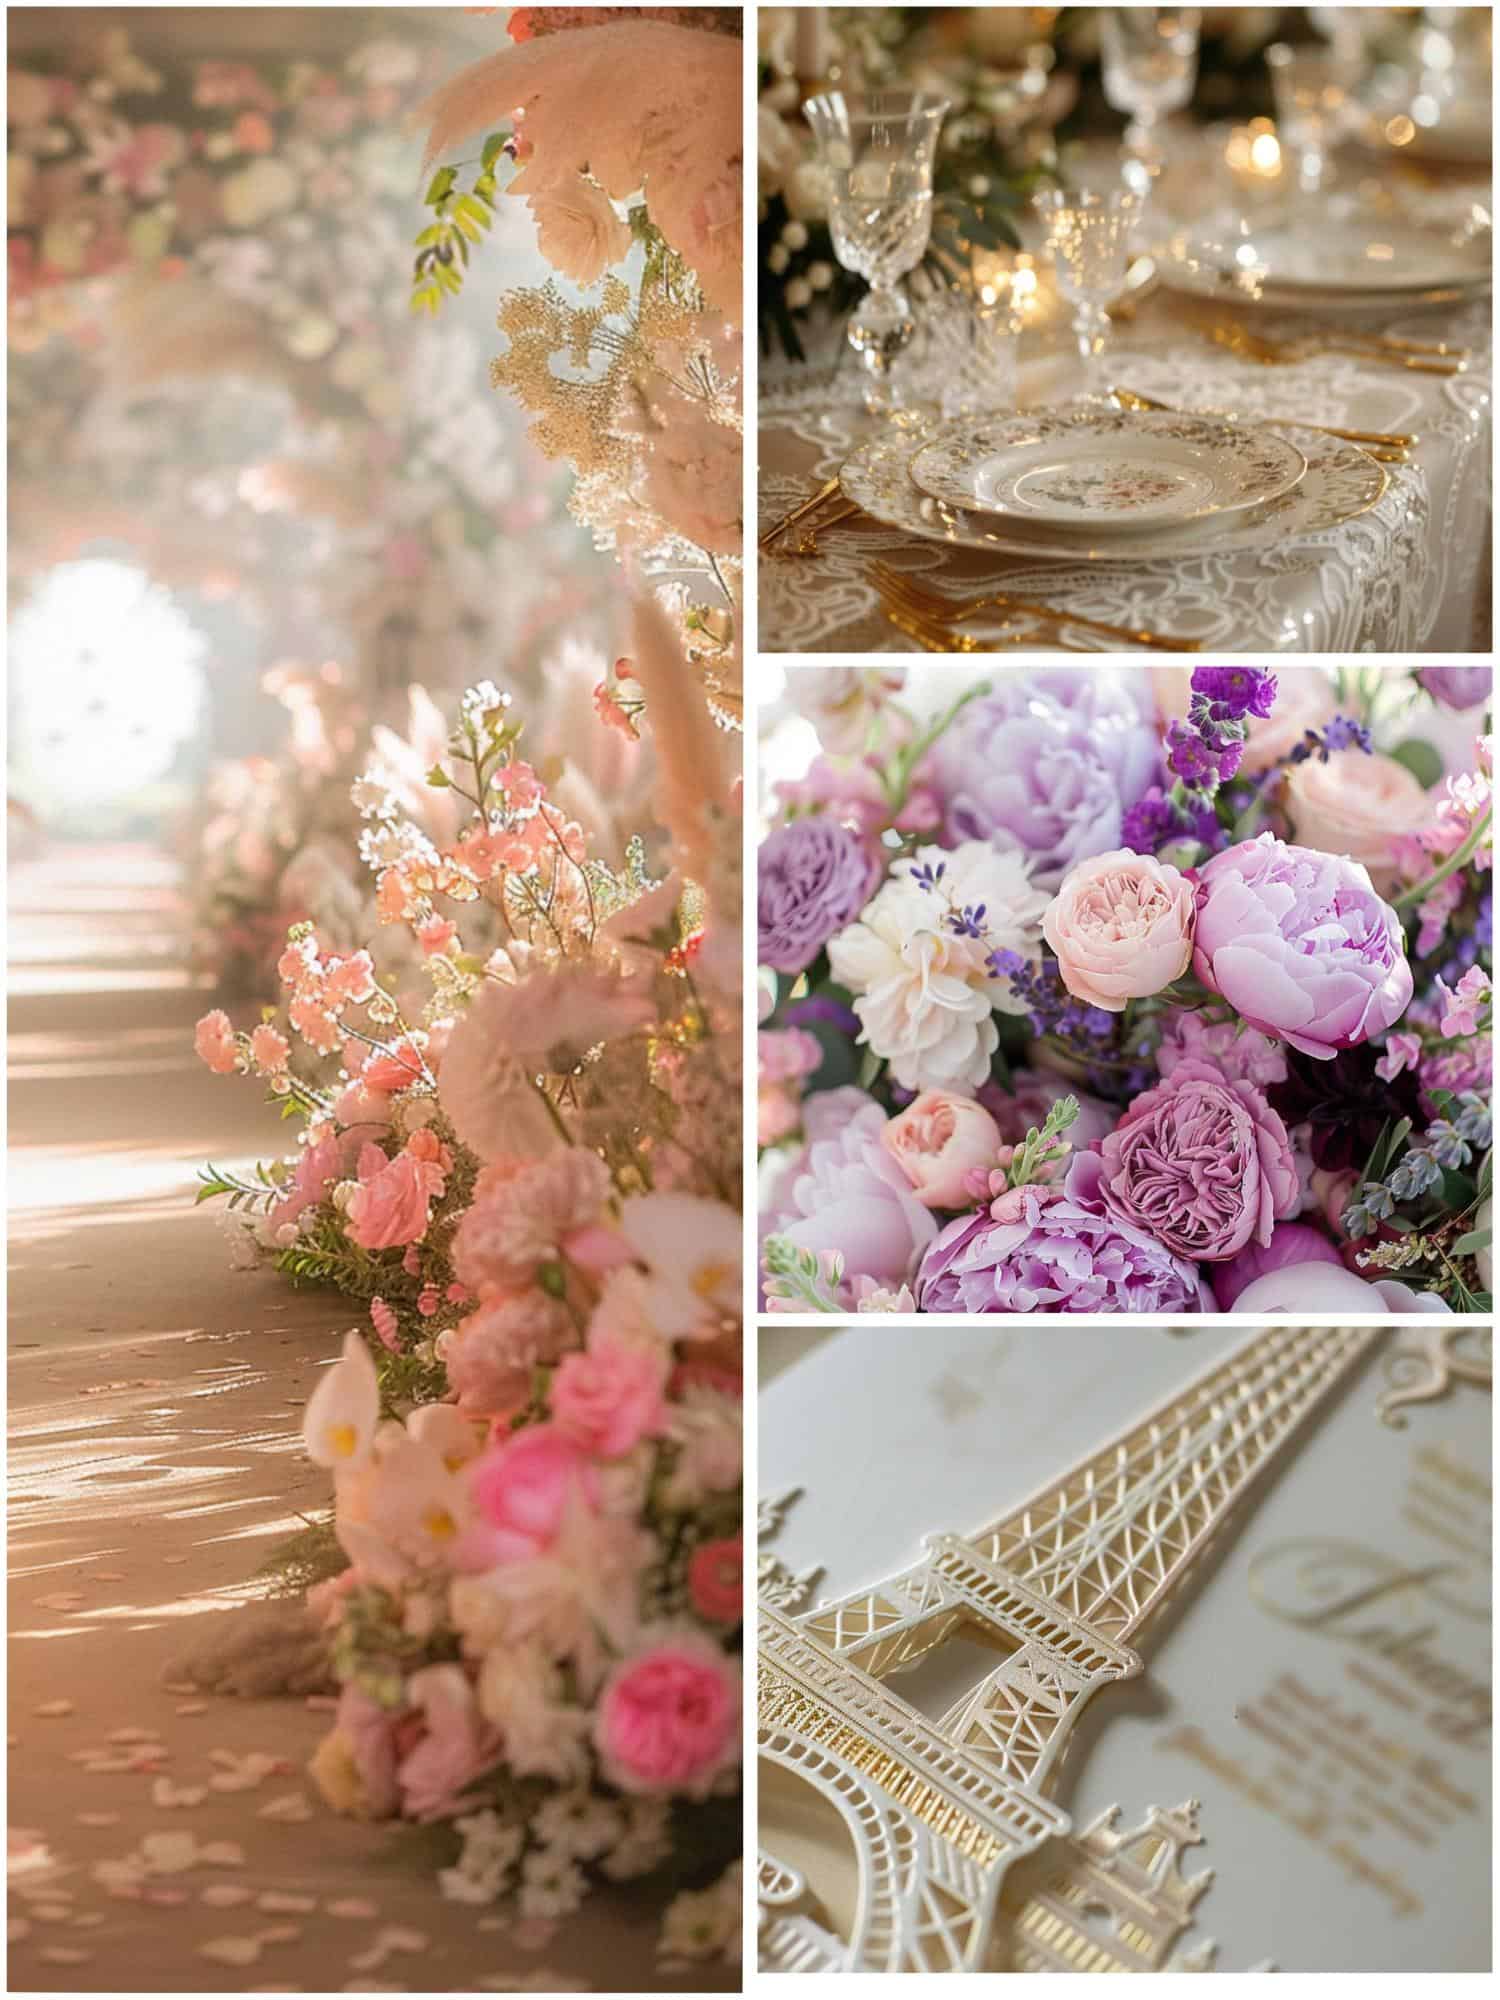 paris-inspired wedding theme ideas